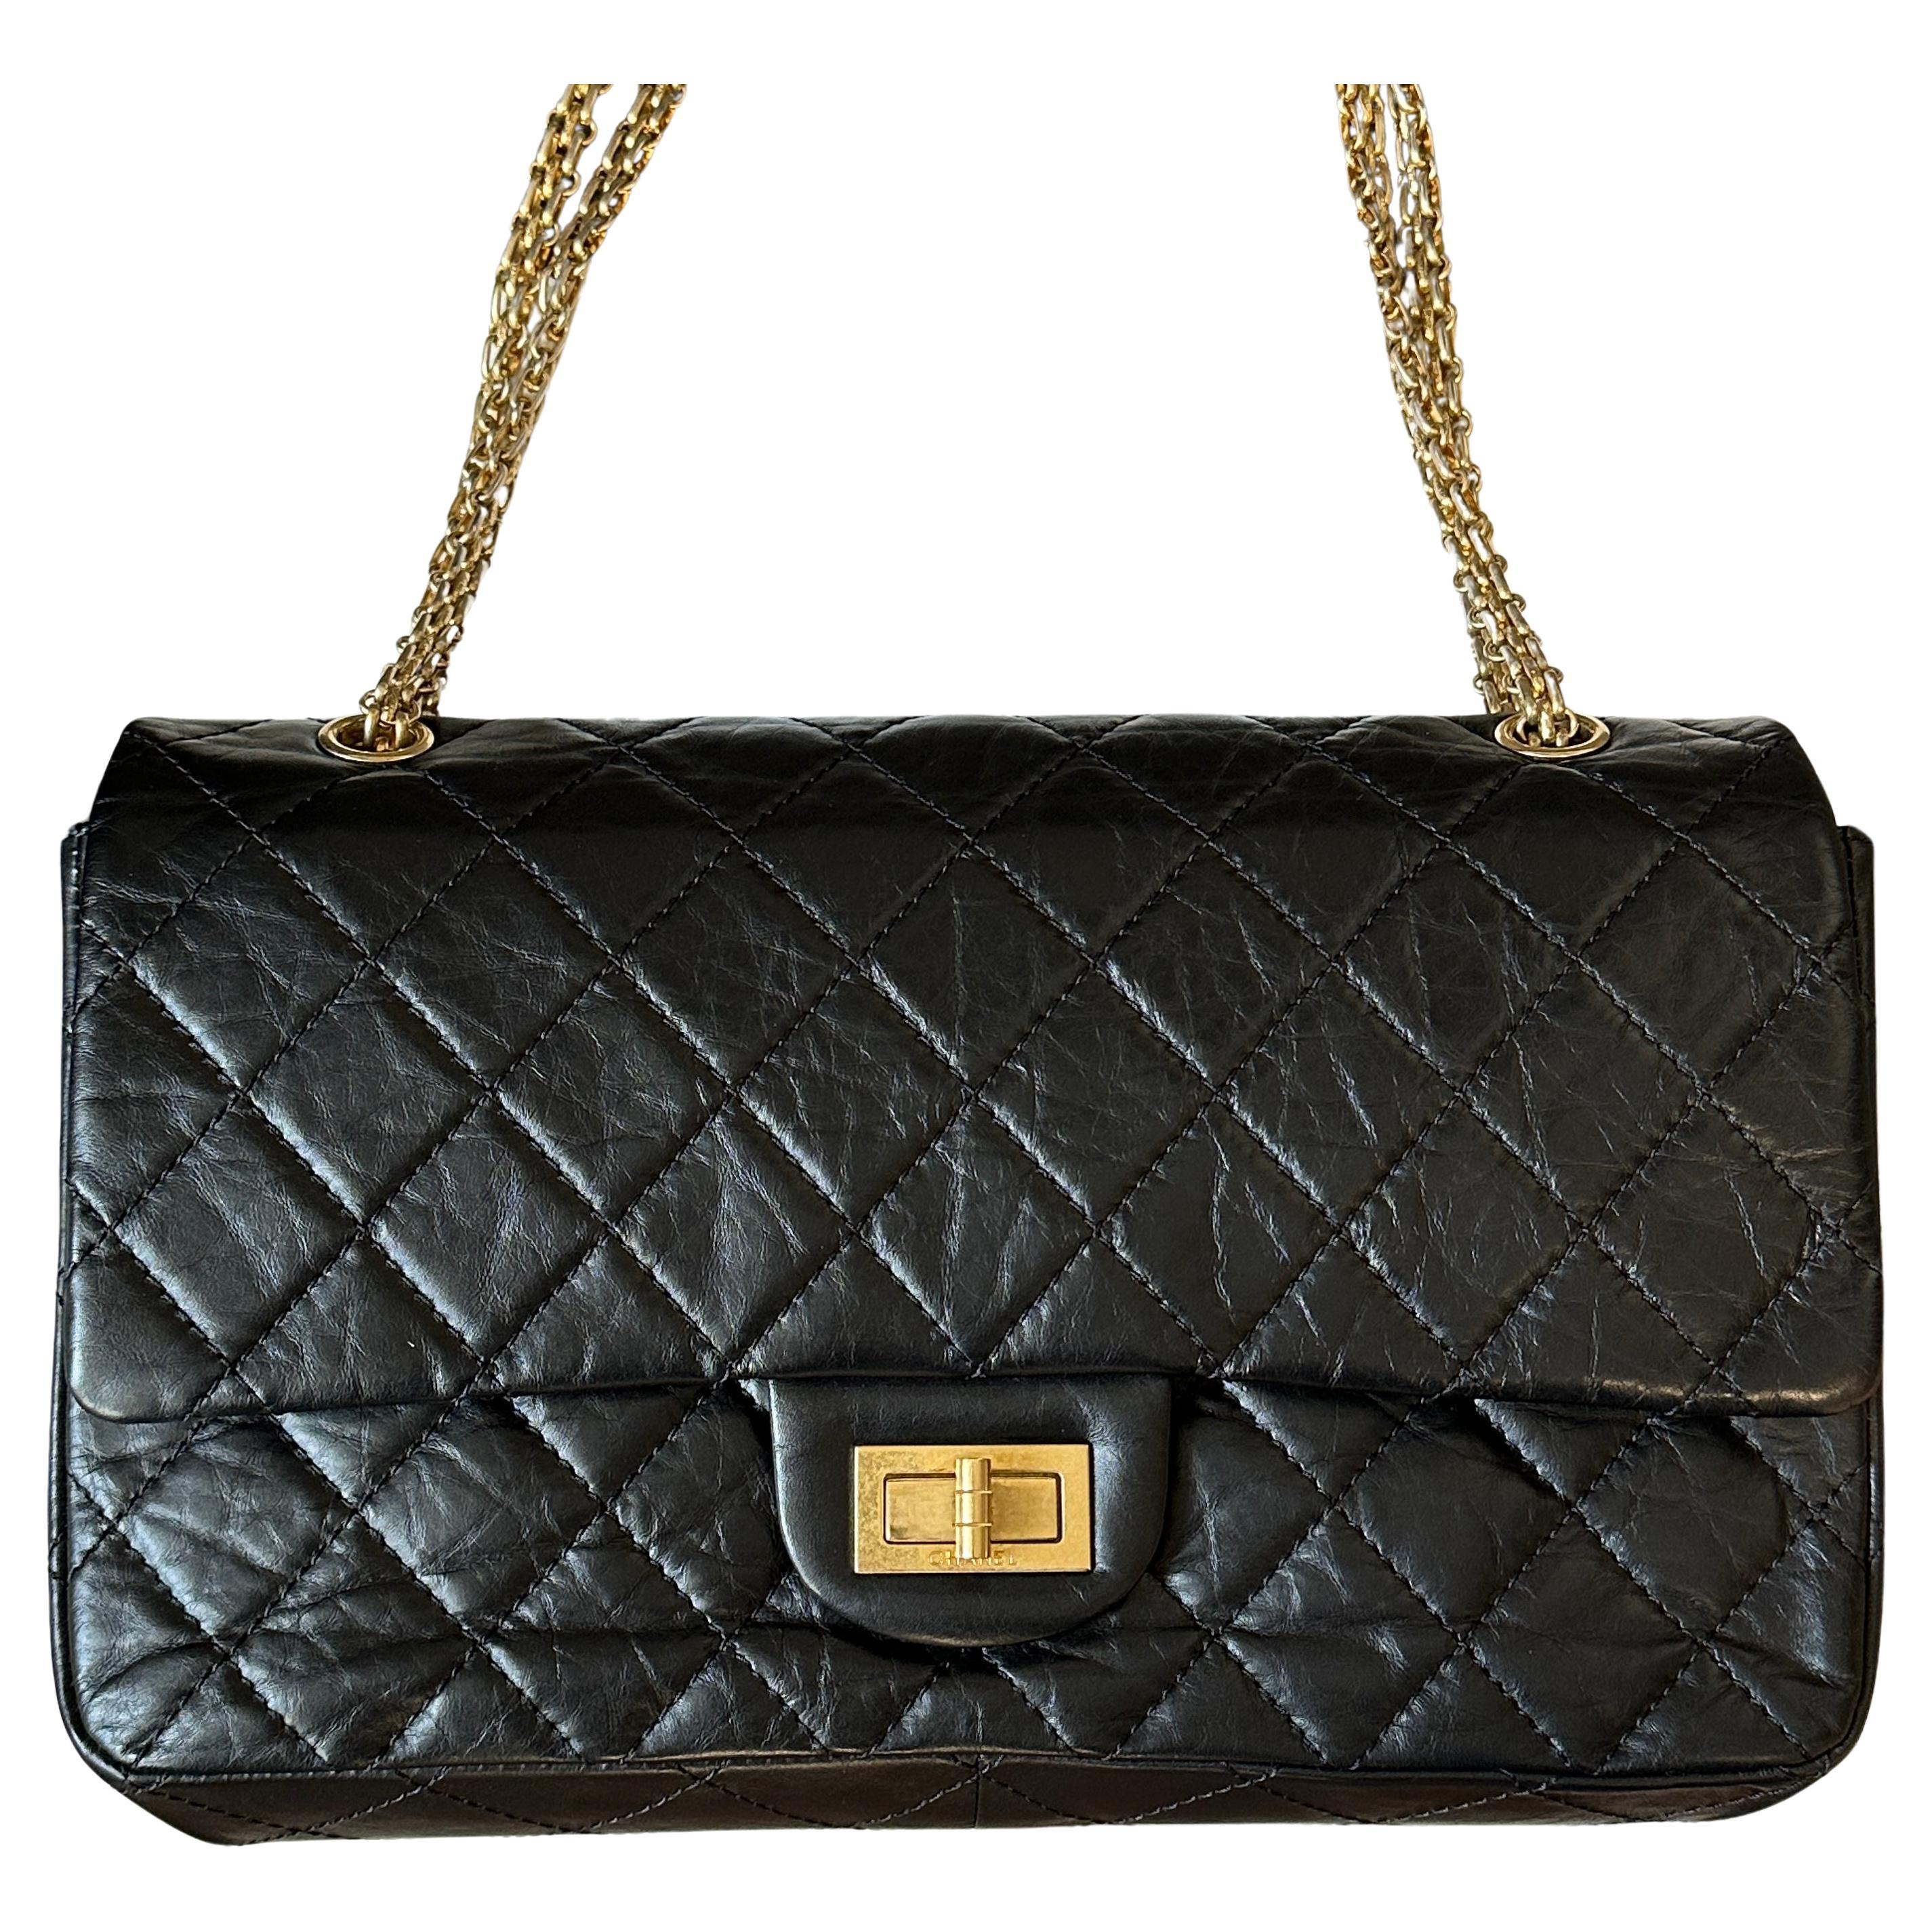 Chanel A37590 Maxi, Jumbo Flap Bag 2.55 Black/Gold Distressed Lambskin